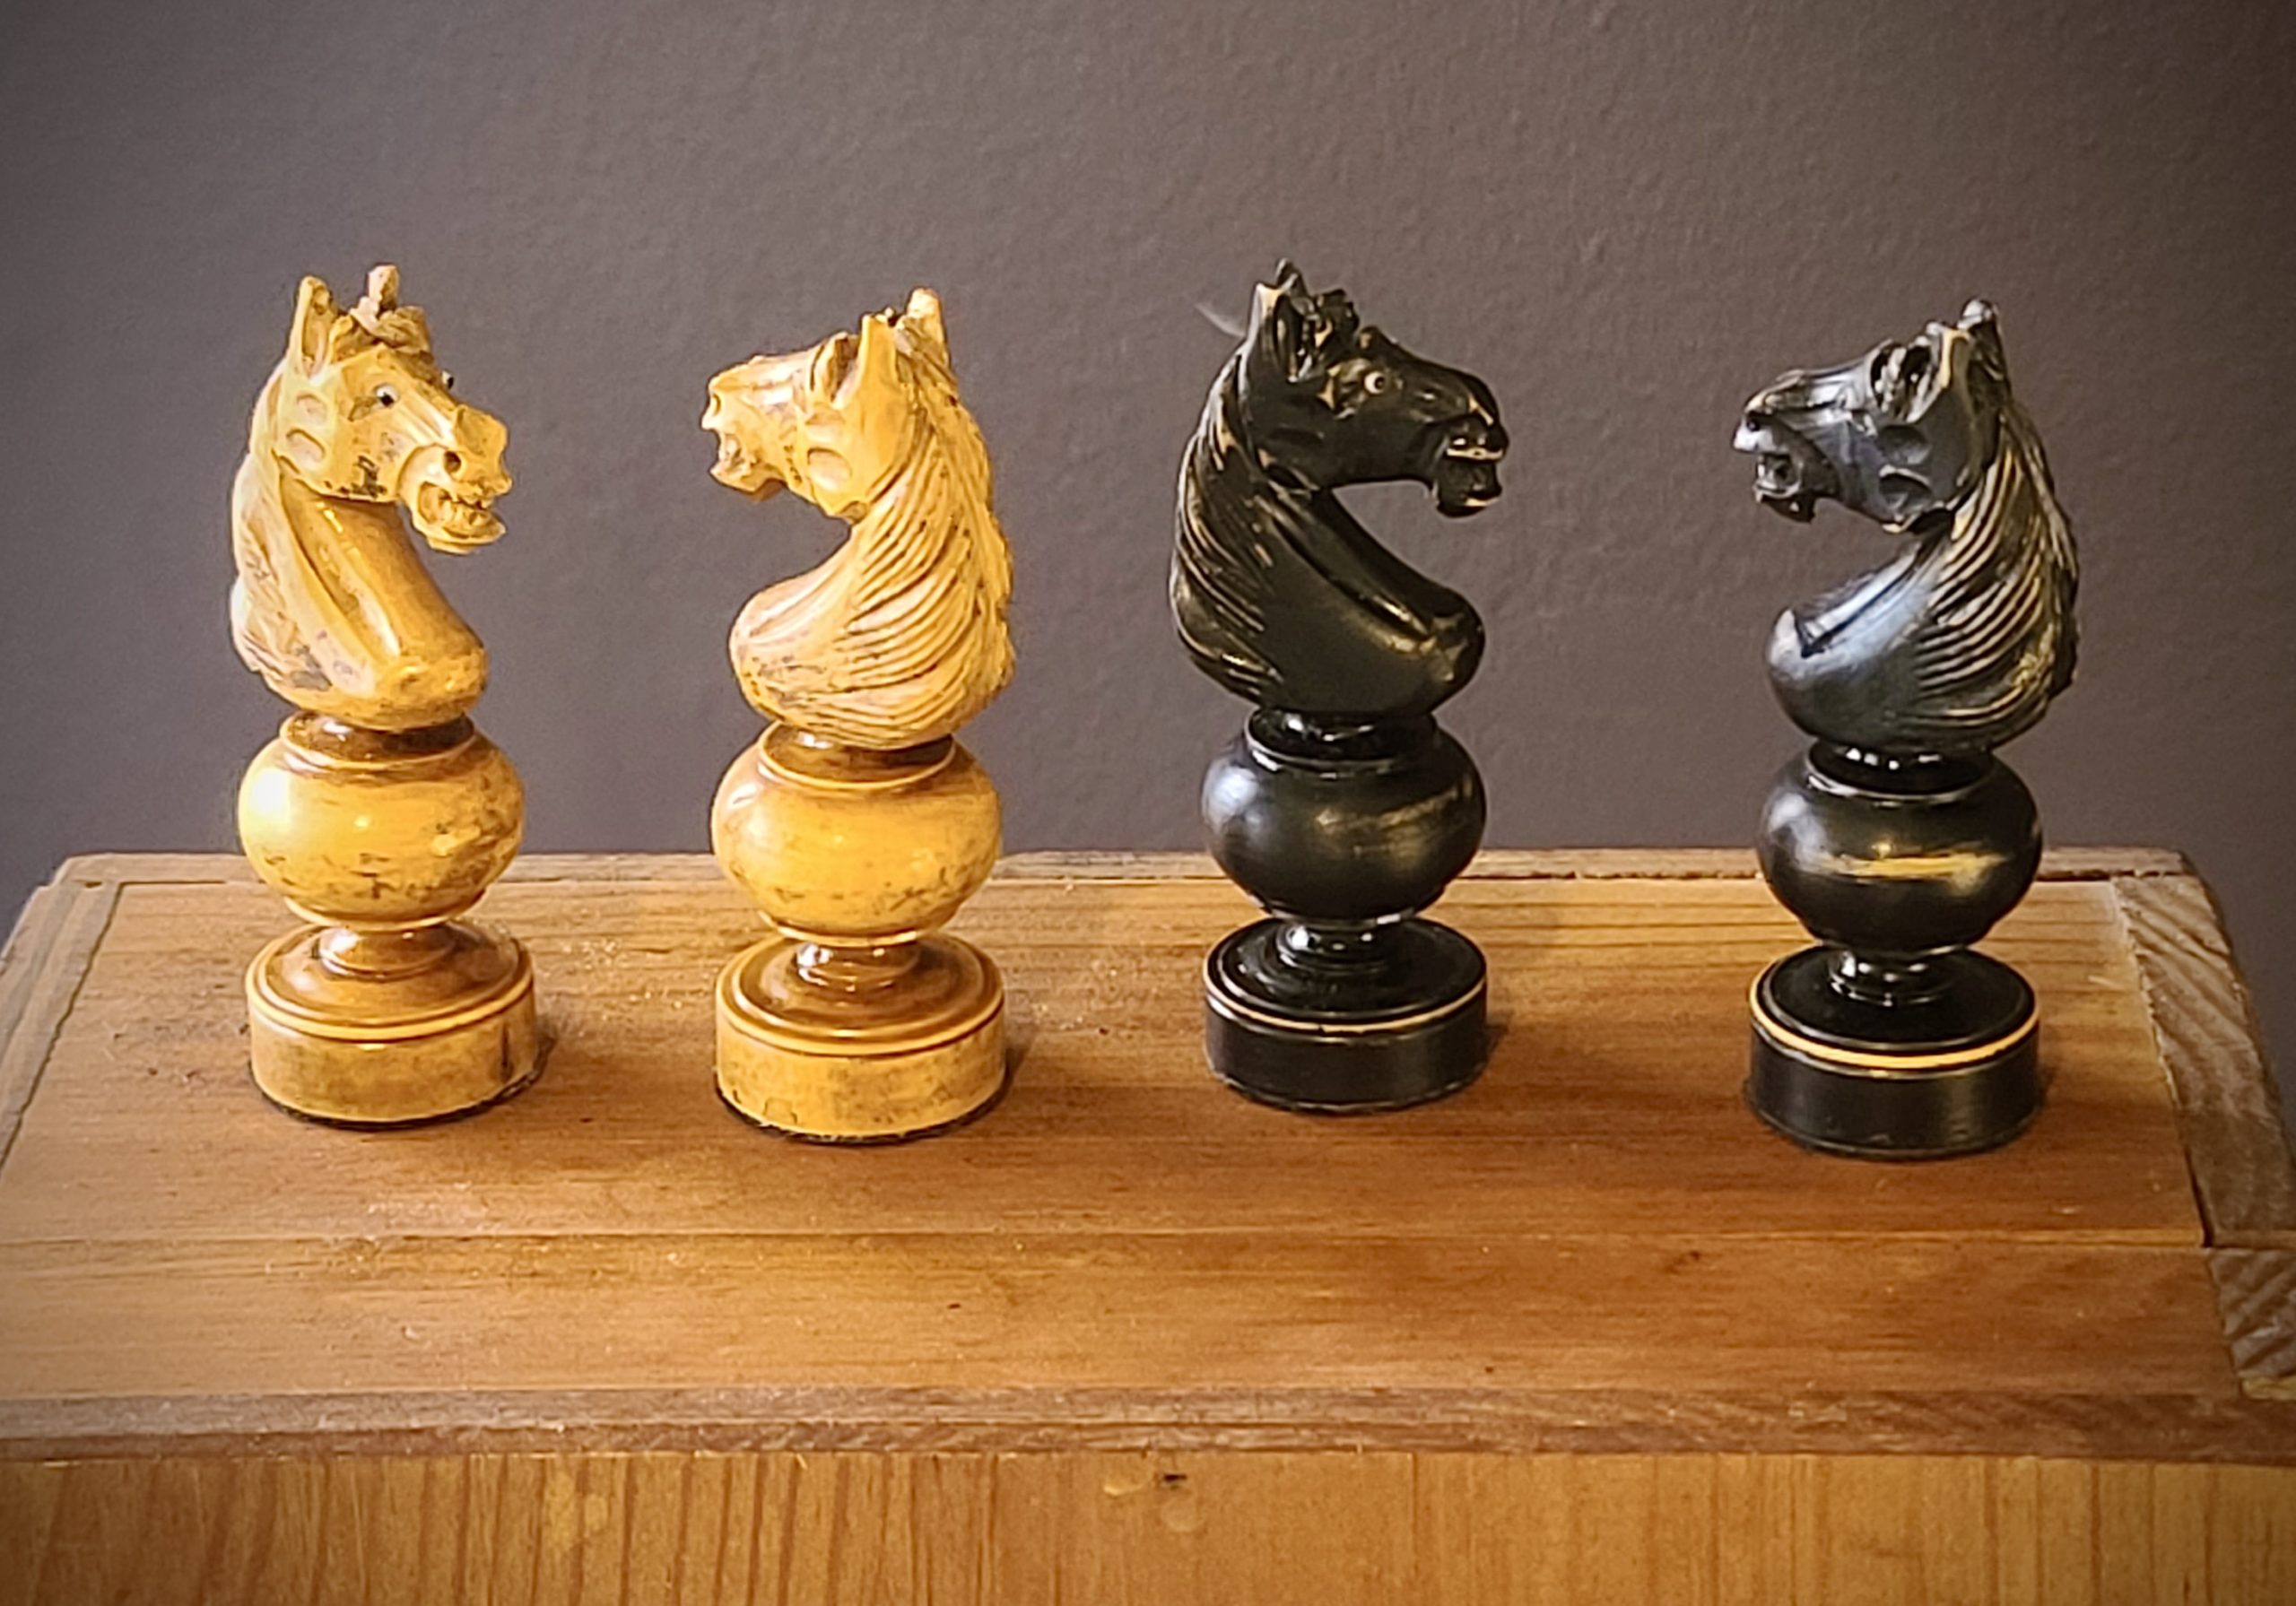 French Knight Chess Set 